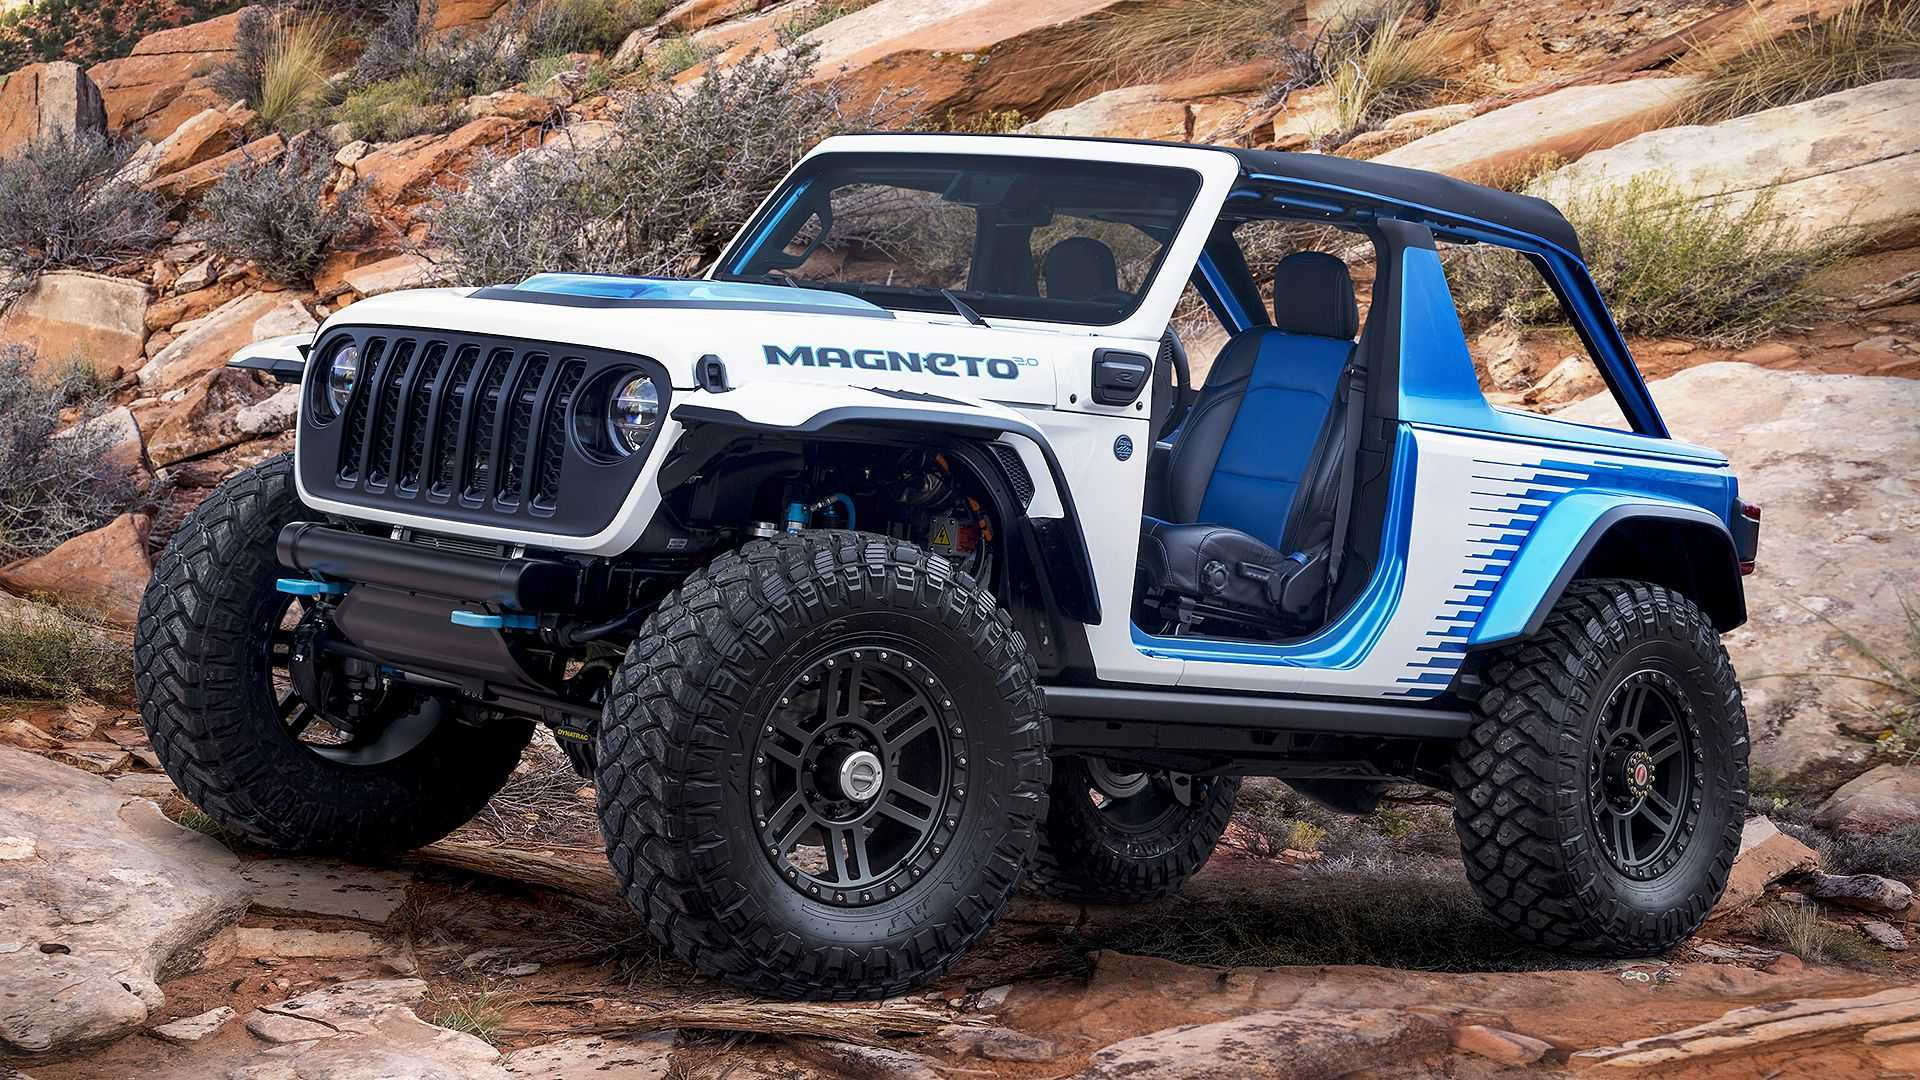 Jeep Wrangler Magneto 2.0 concept - 2022 Moab Easter Jeep Safari